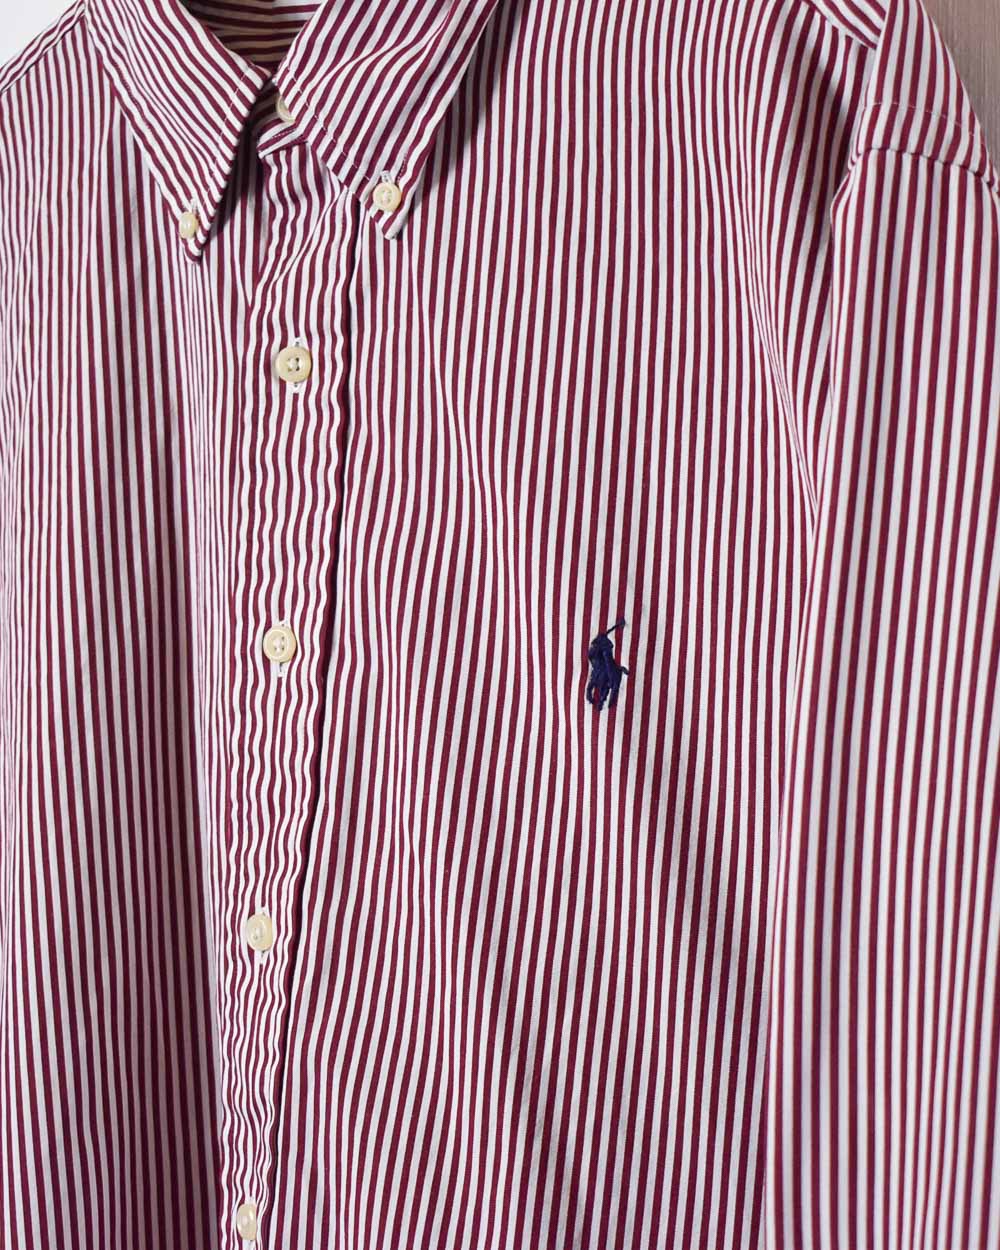 Maroon Polo Ralph Lauren Striped Shirt - X-Large